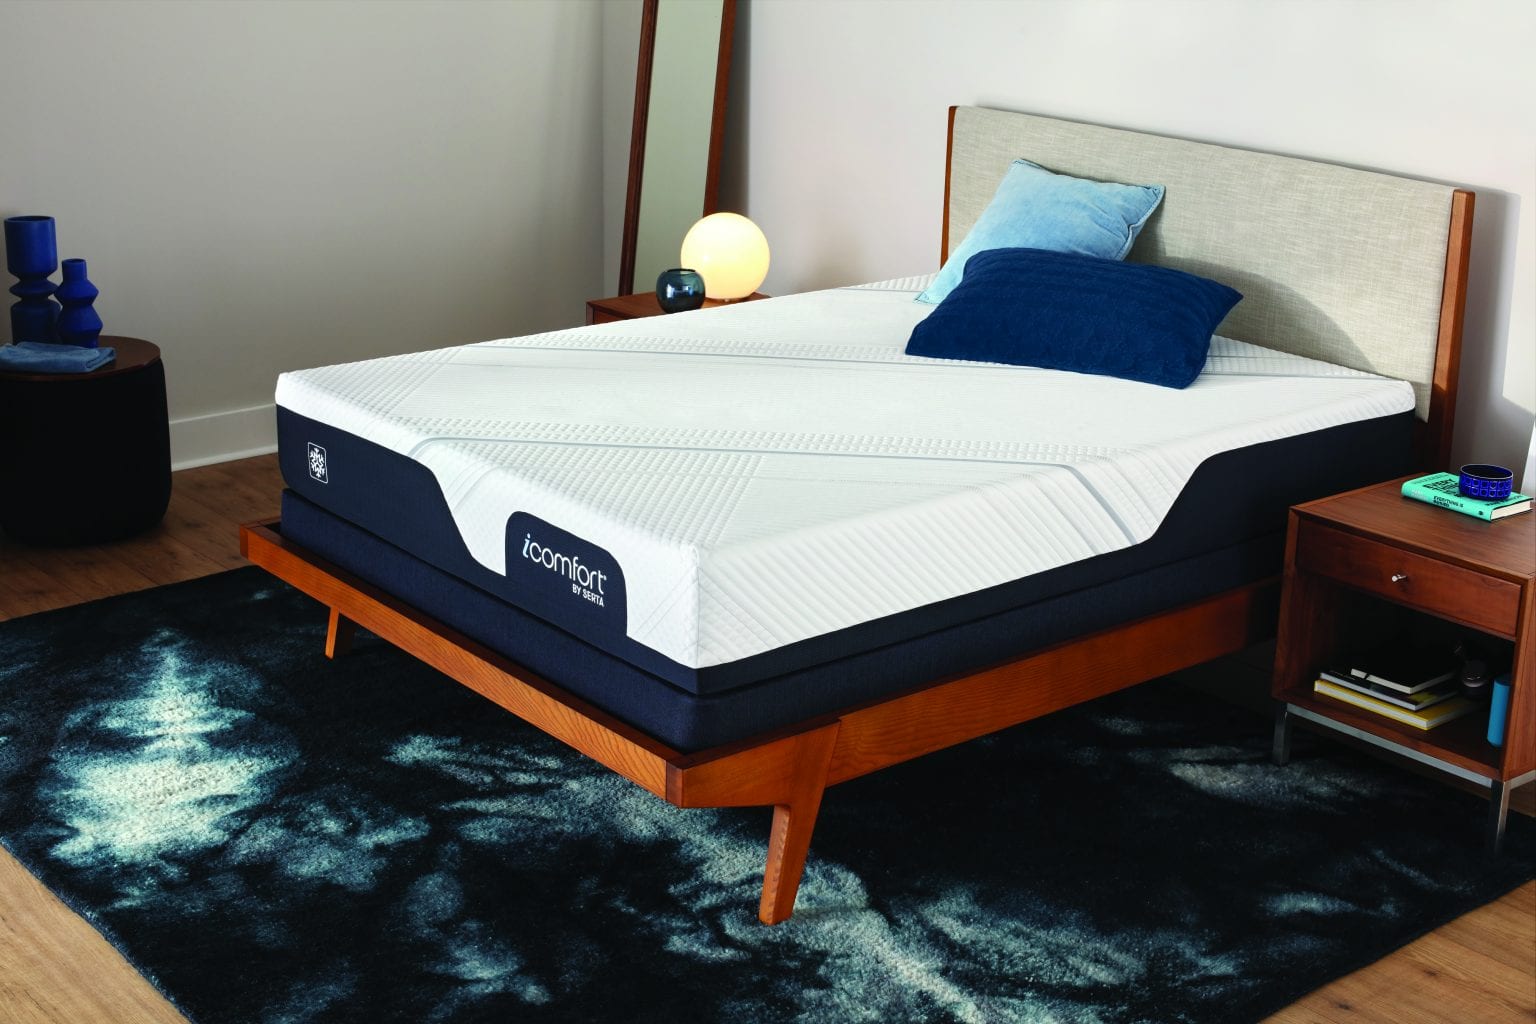 serta limited edition plush full mattress only